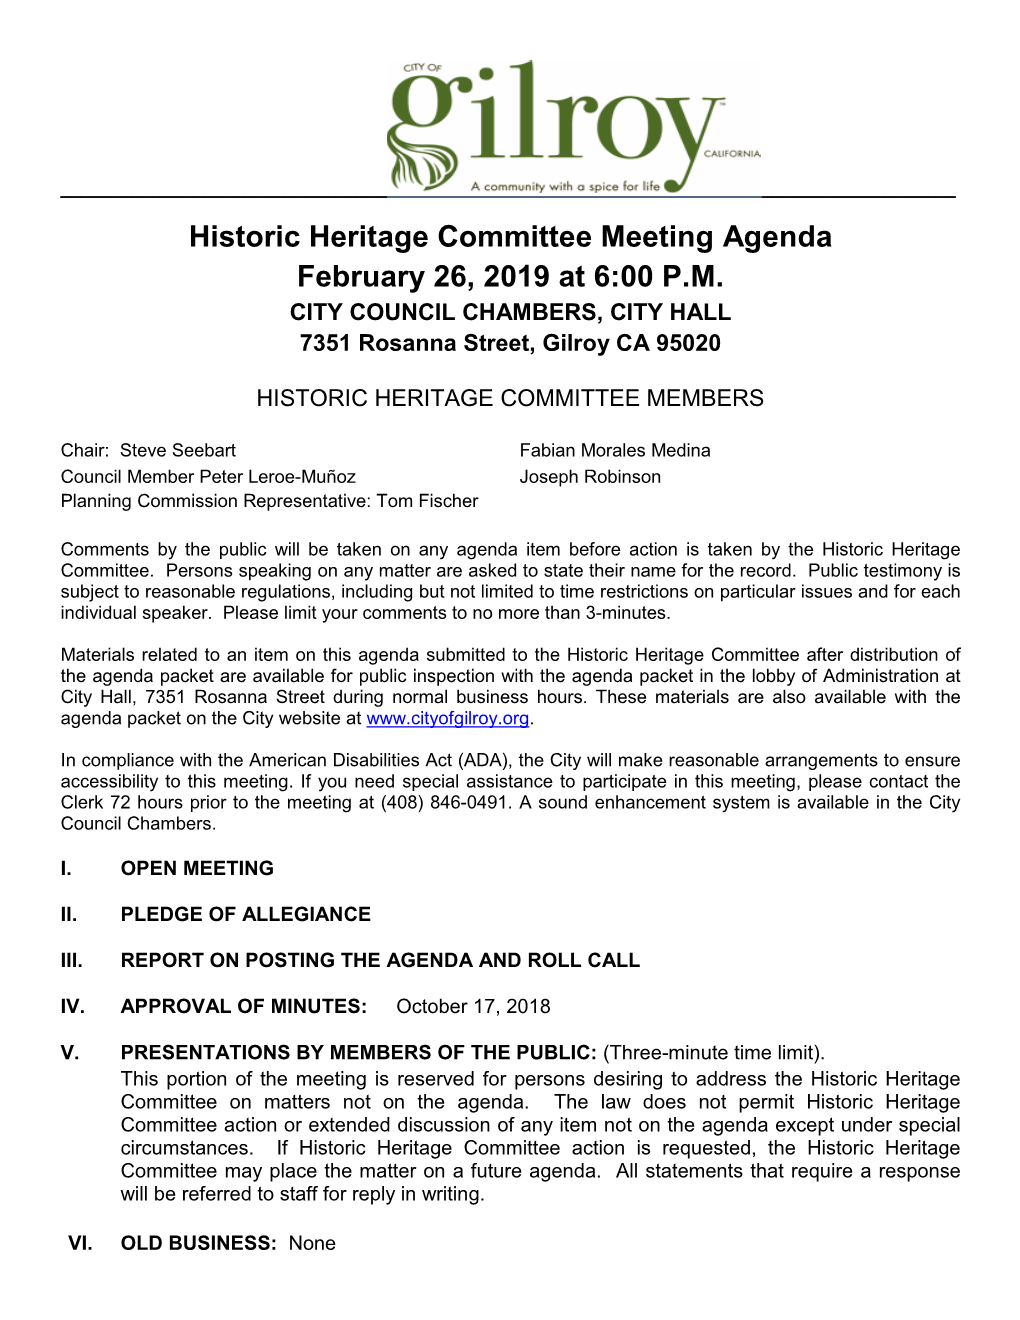 Historic Heritage Committee Meeting Agenda February 26, 2019 at 6:00 P.M